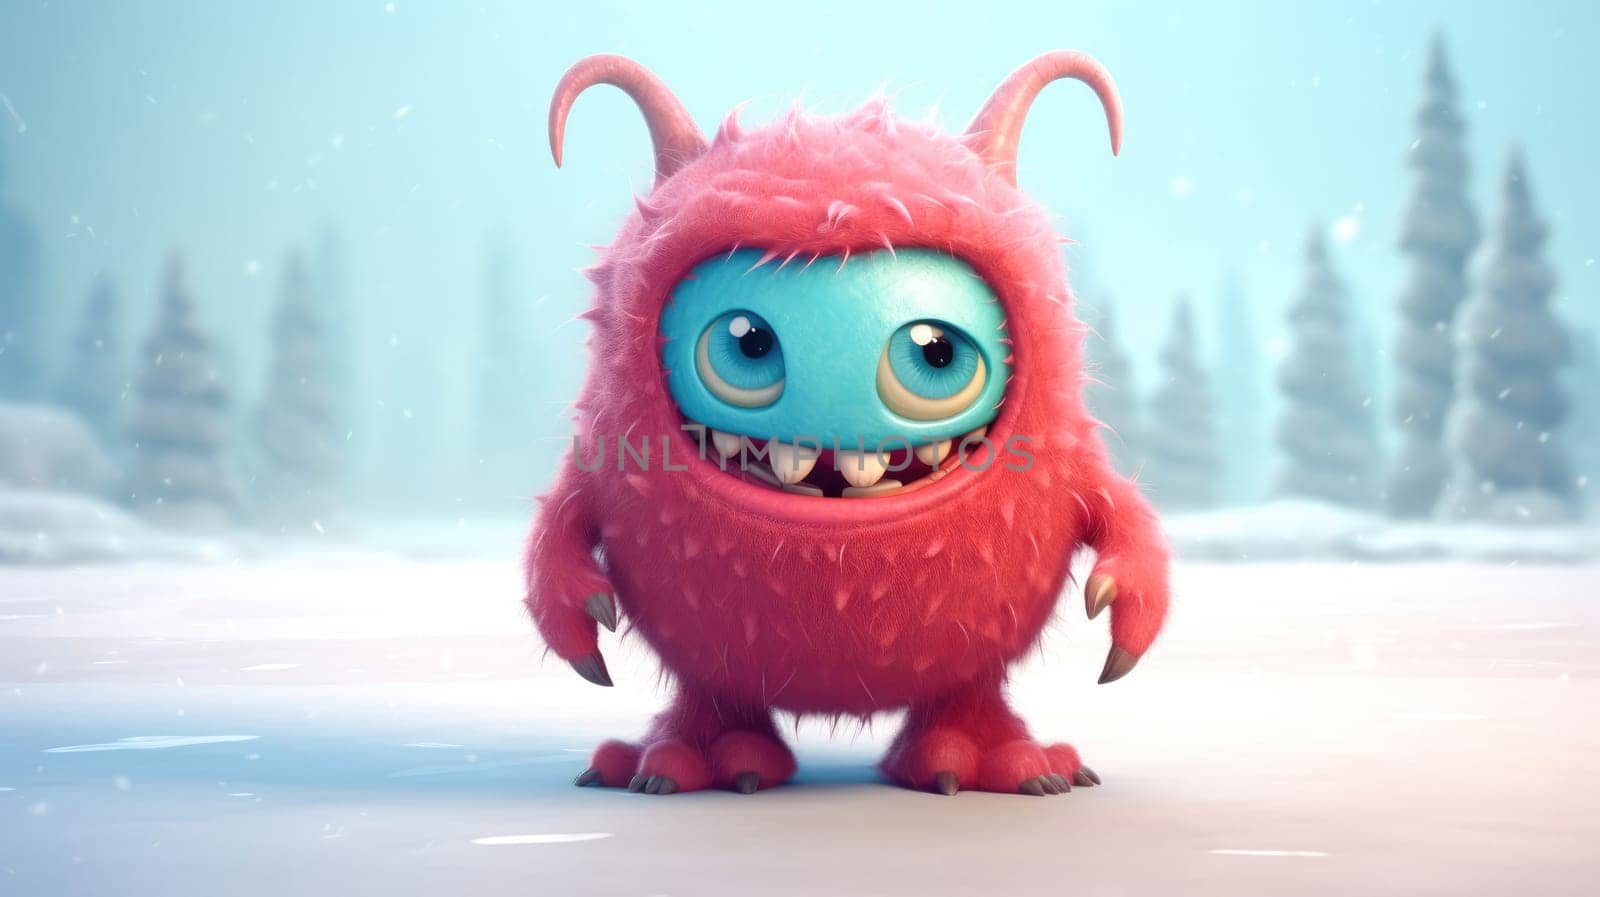 Cute Furry fluffy Red Monster, cartoon 3d, alien monster illustration, on winter background